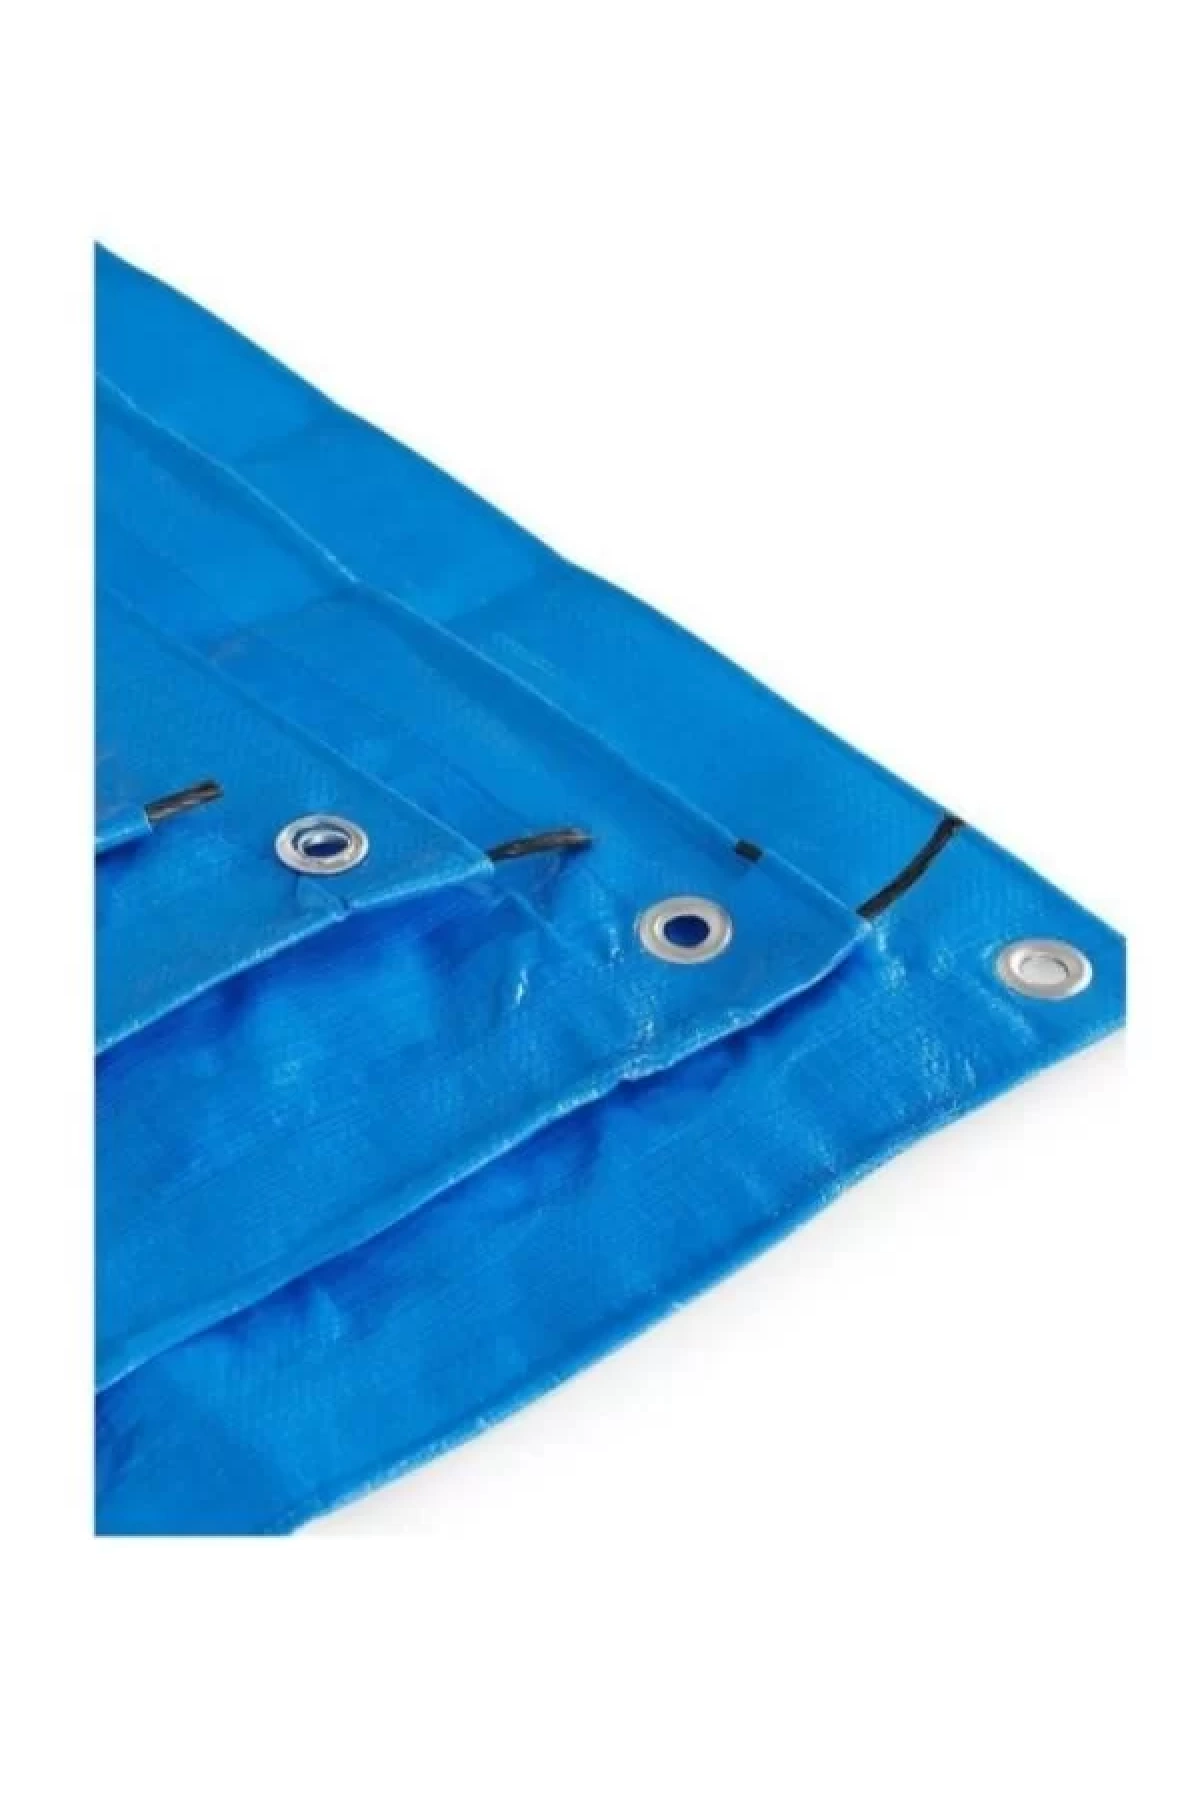 Su Geçirmez PVC-Parafin Gölgelik Çadır-Tente-Branda Mavi 3x5 m